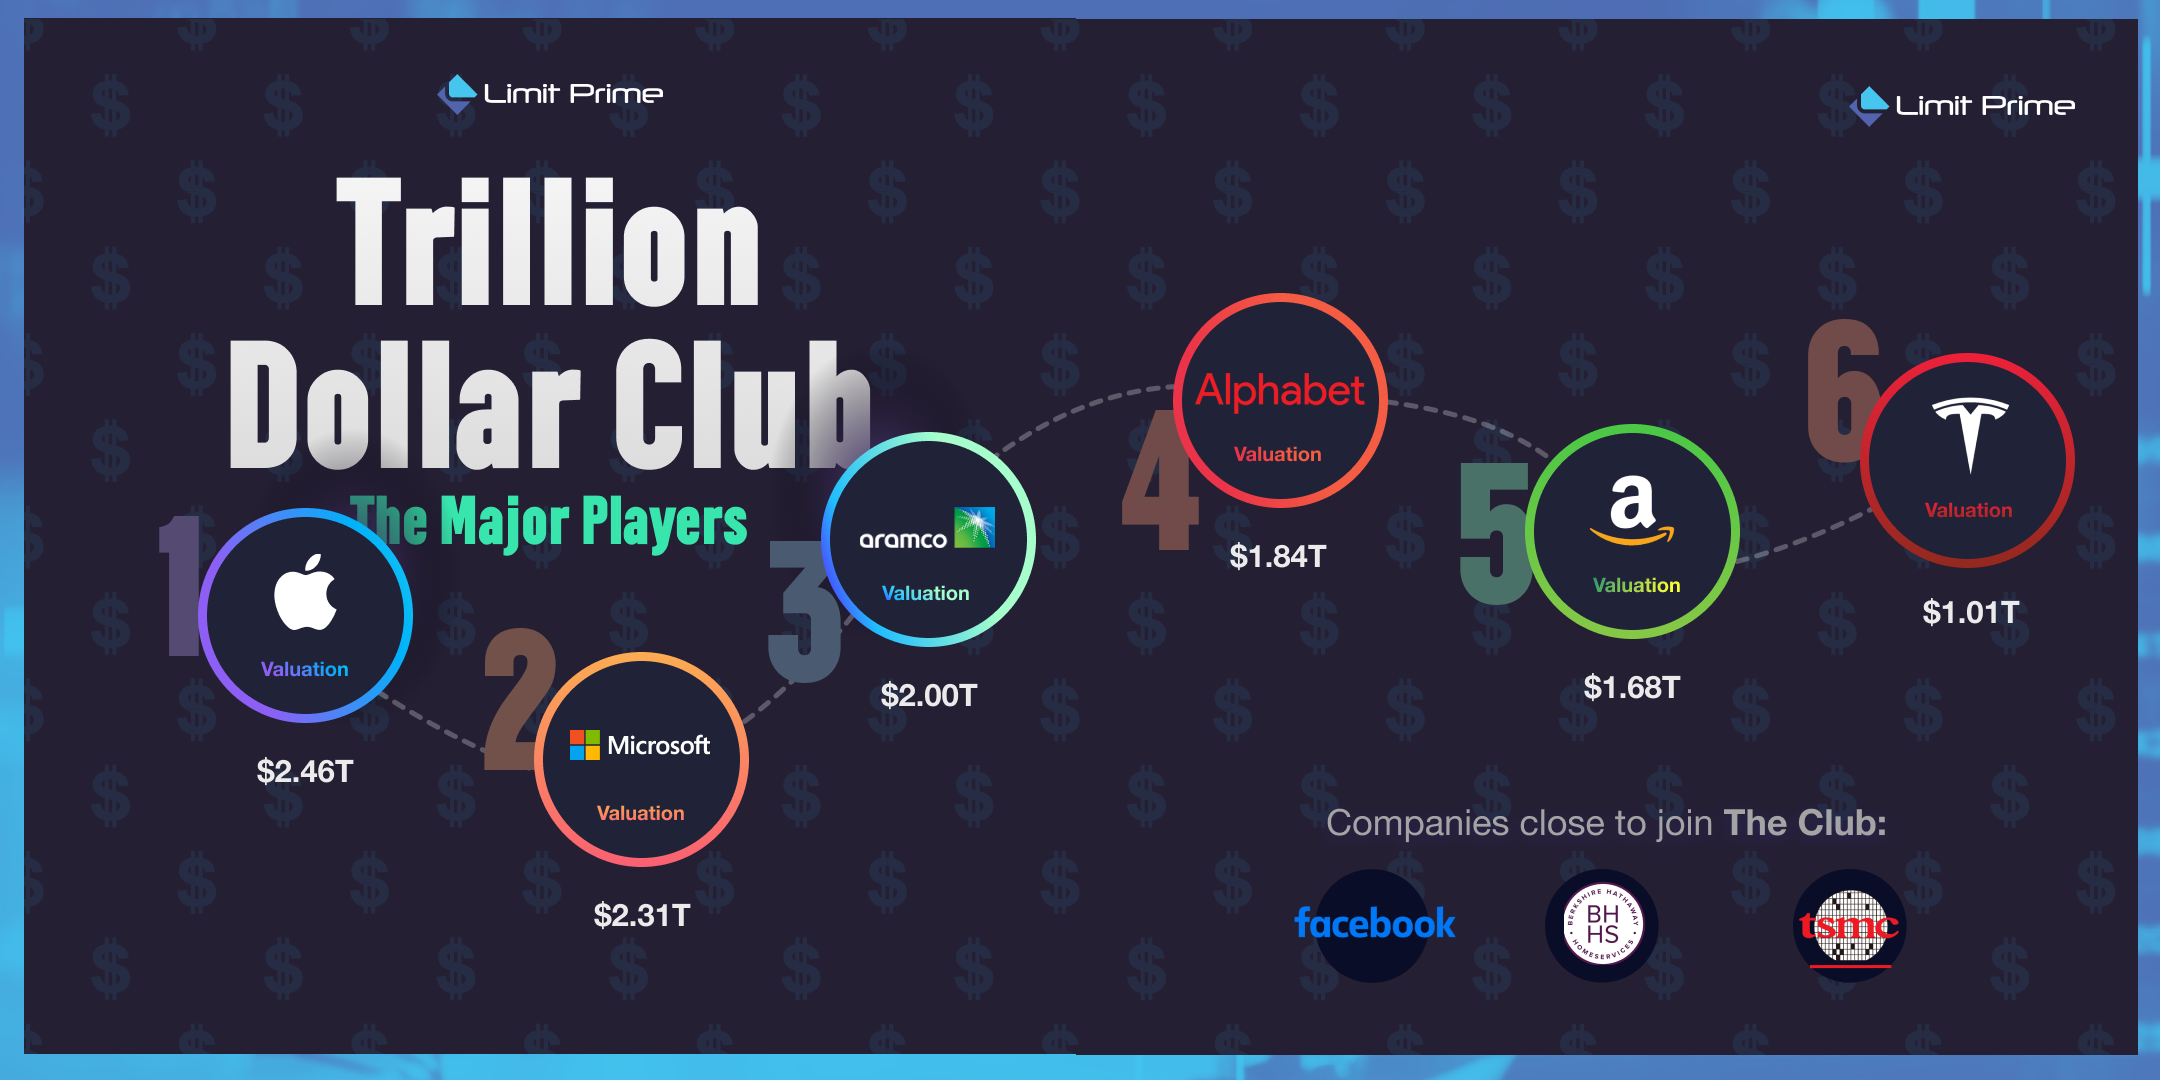 The Trillion Dollar Club - The Major Players